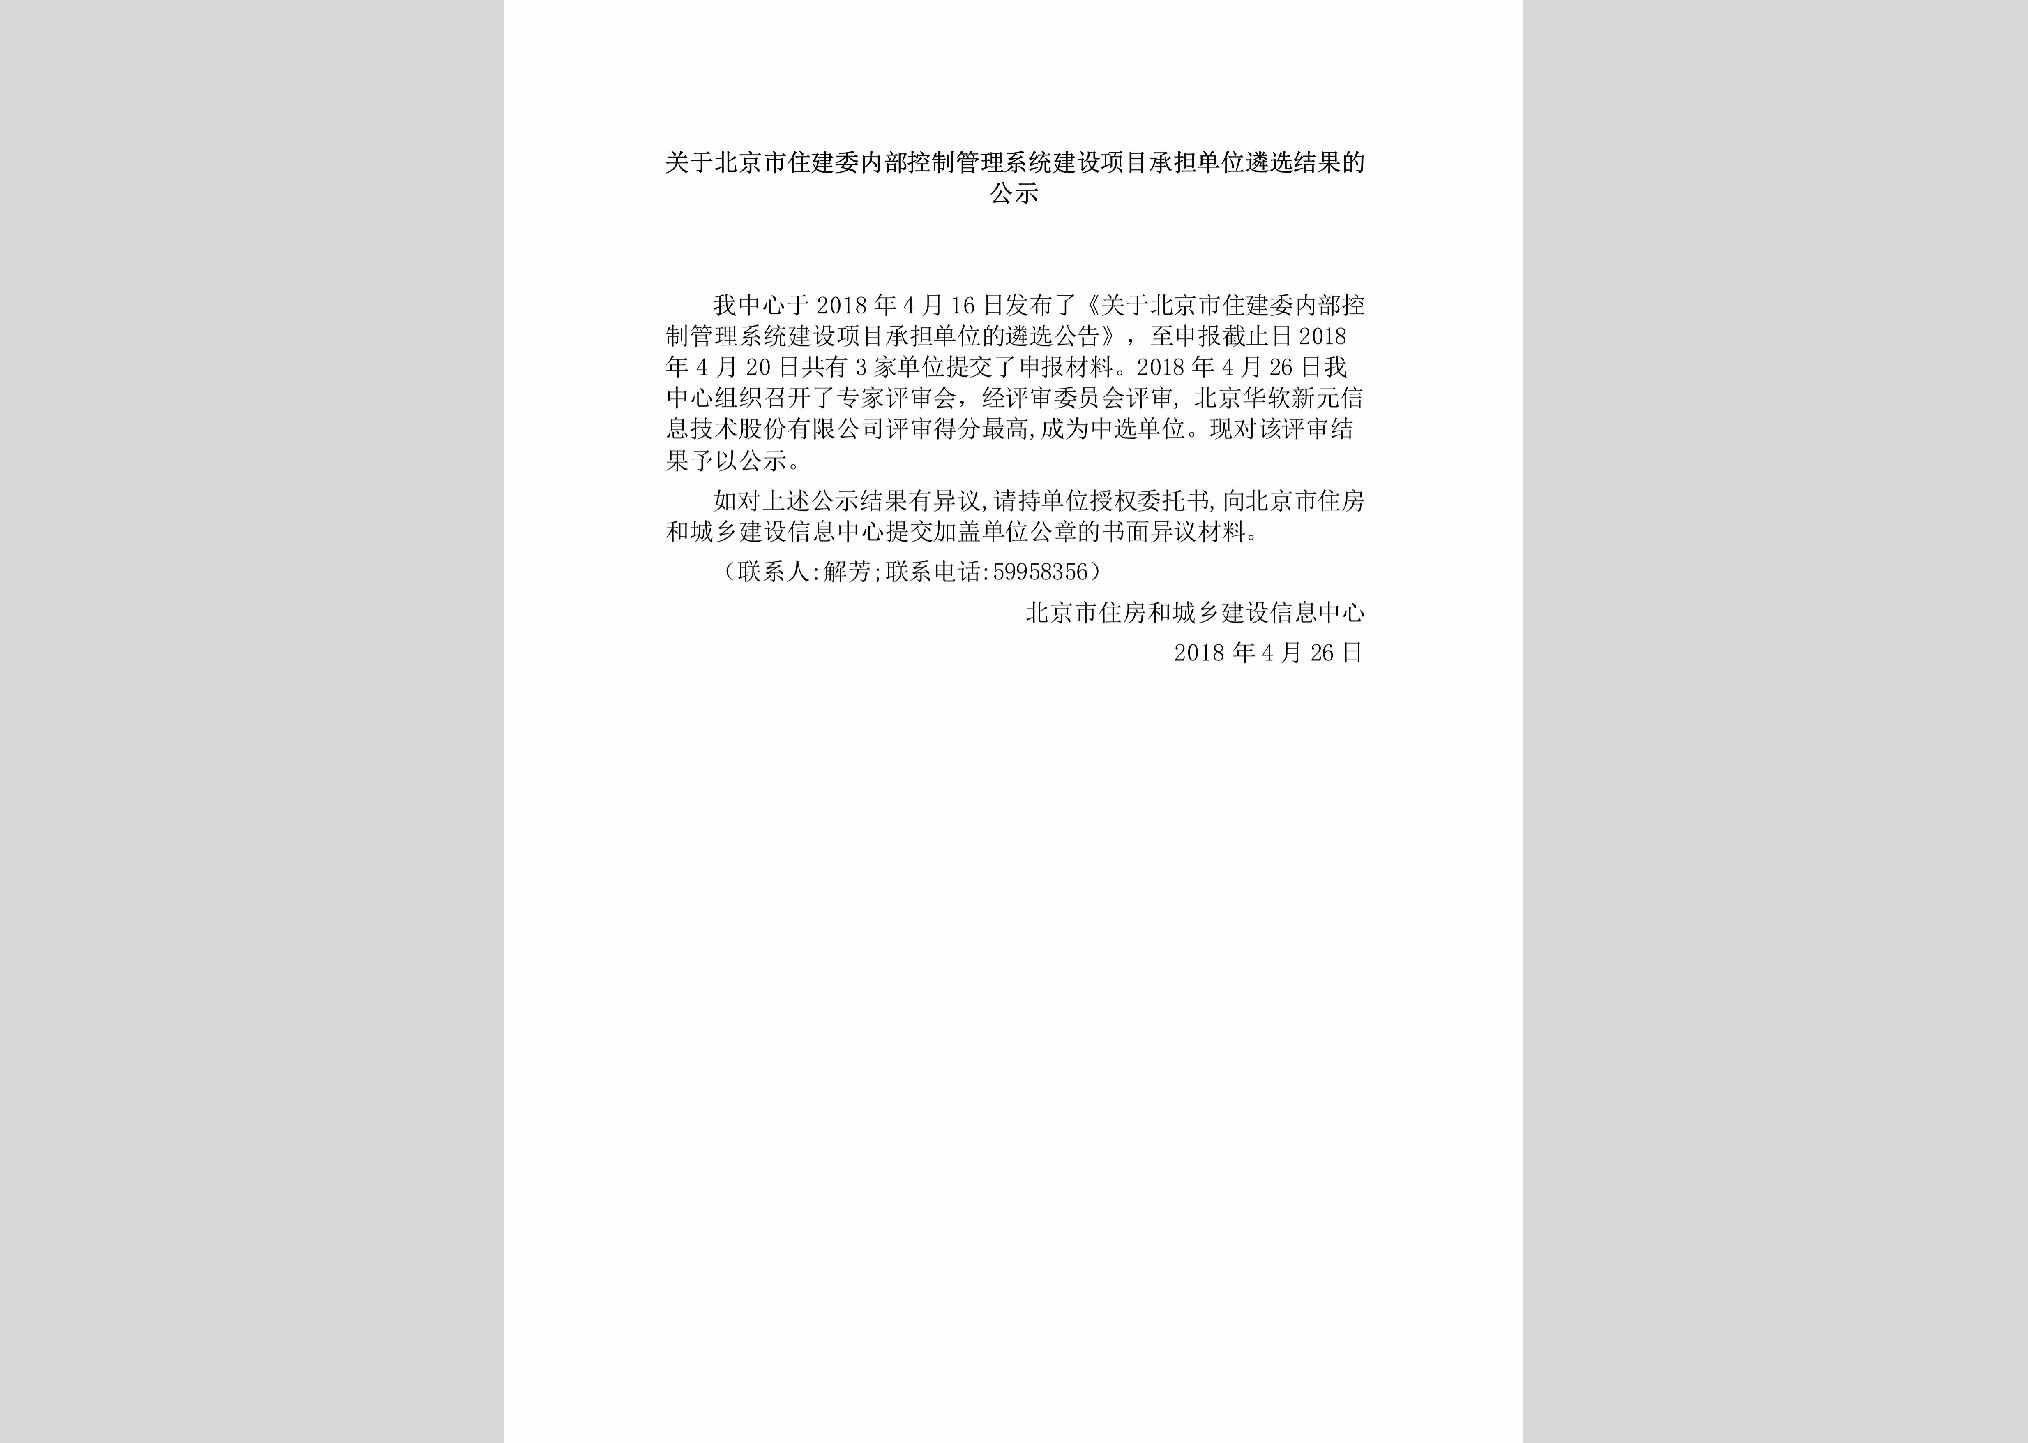 BJ-MBKZGLXT-2018：关于北京市住建委内部控制管理系统建设项目承担单位遴选结果的公示